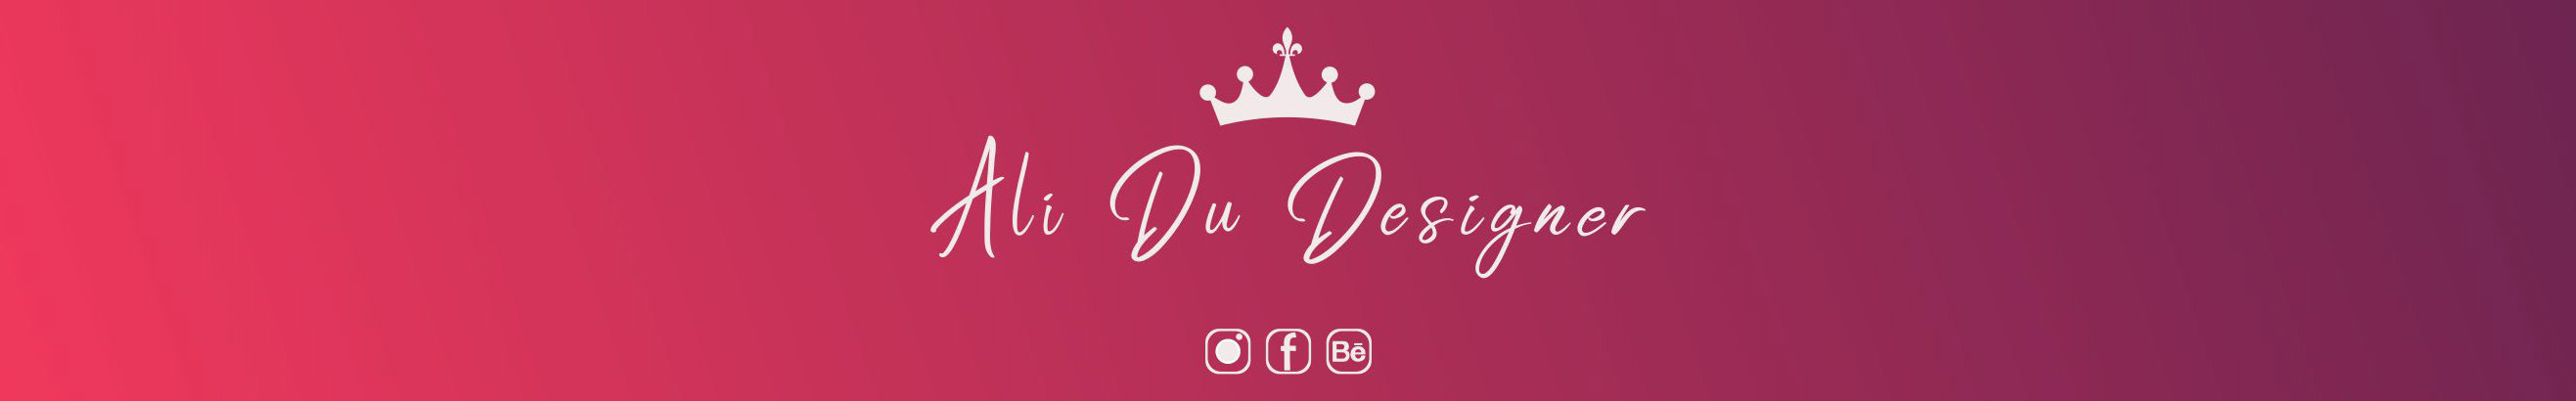 Ali Du Designer's profile banner